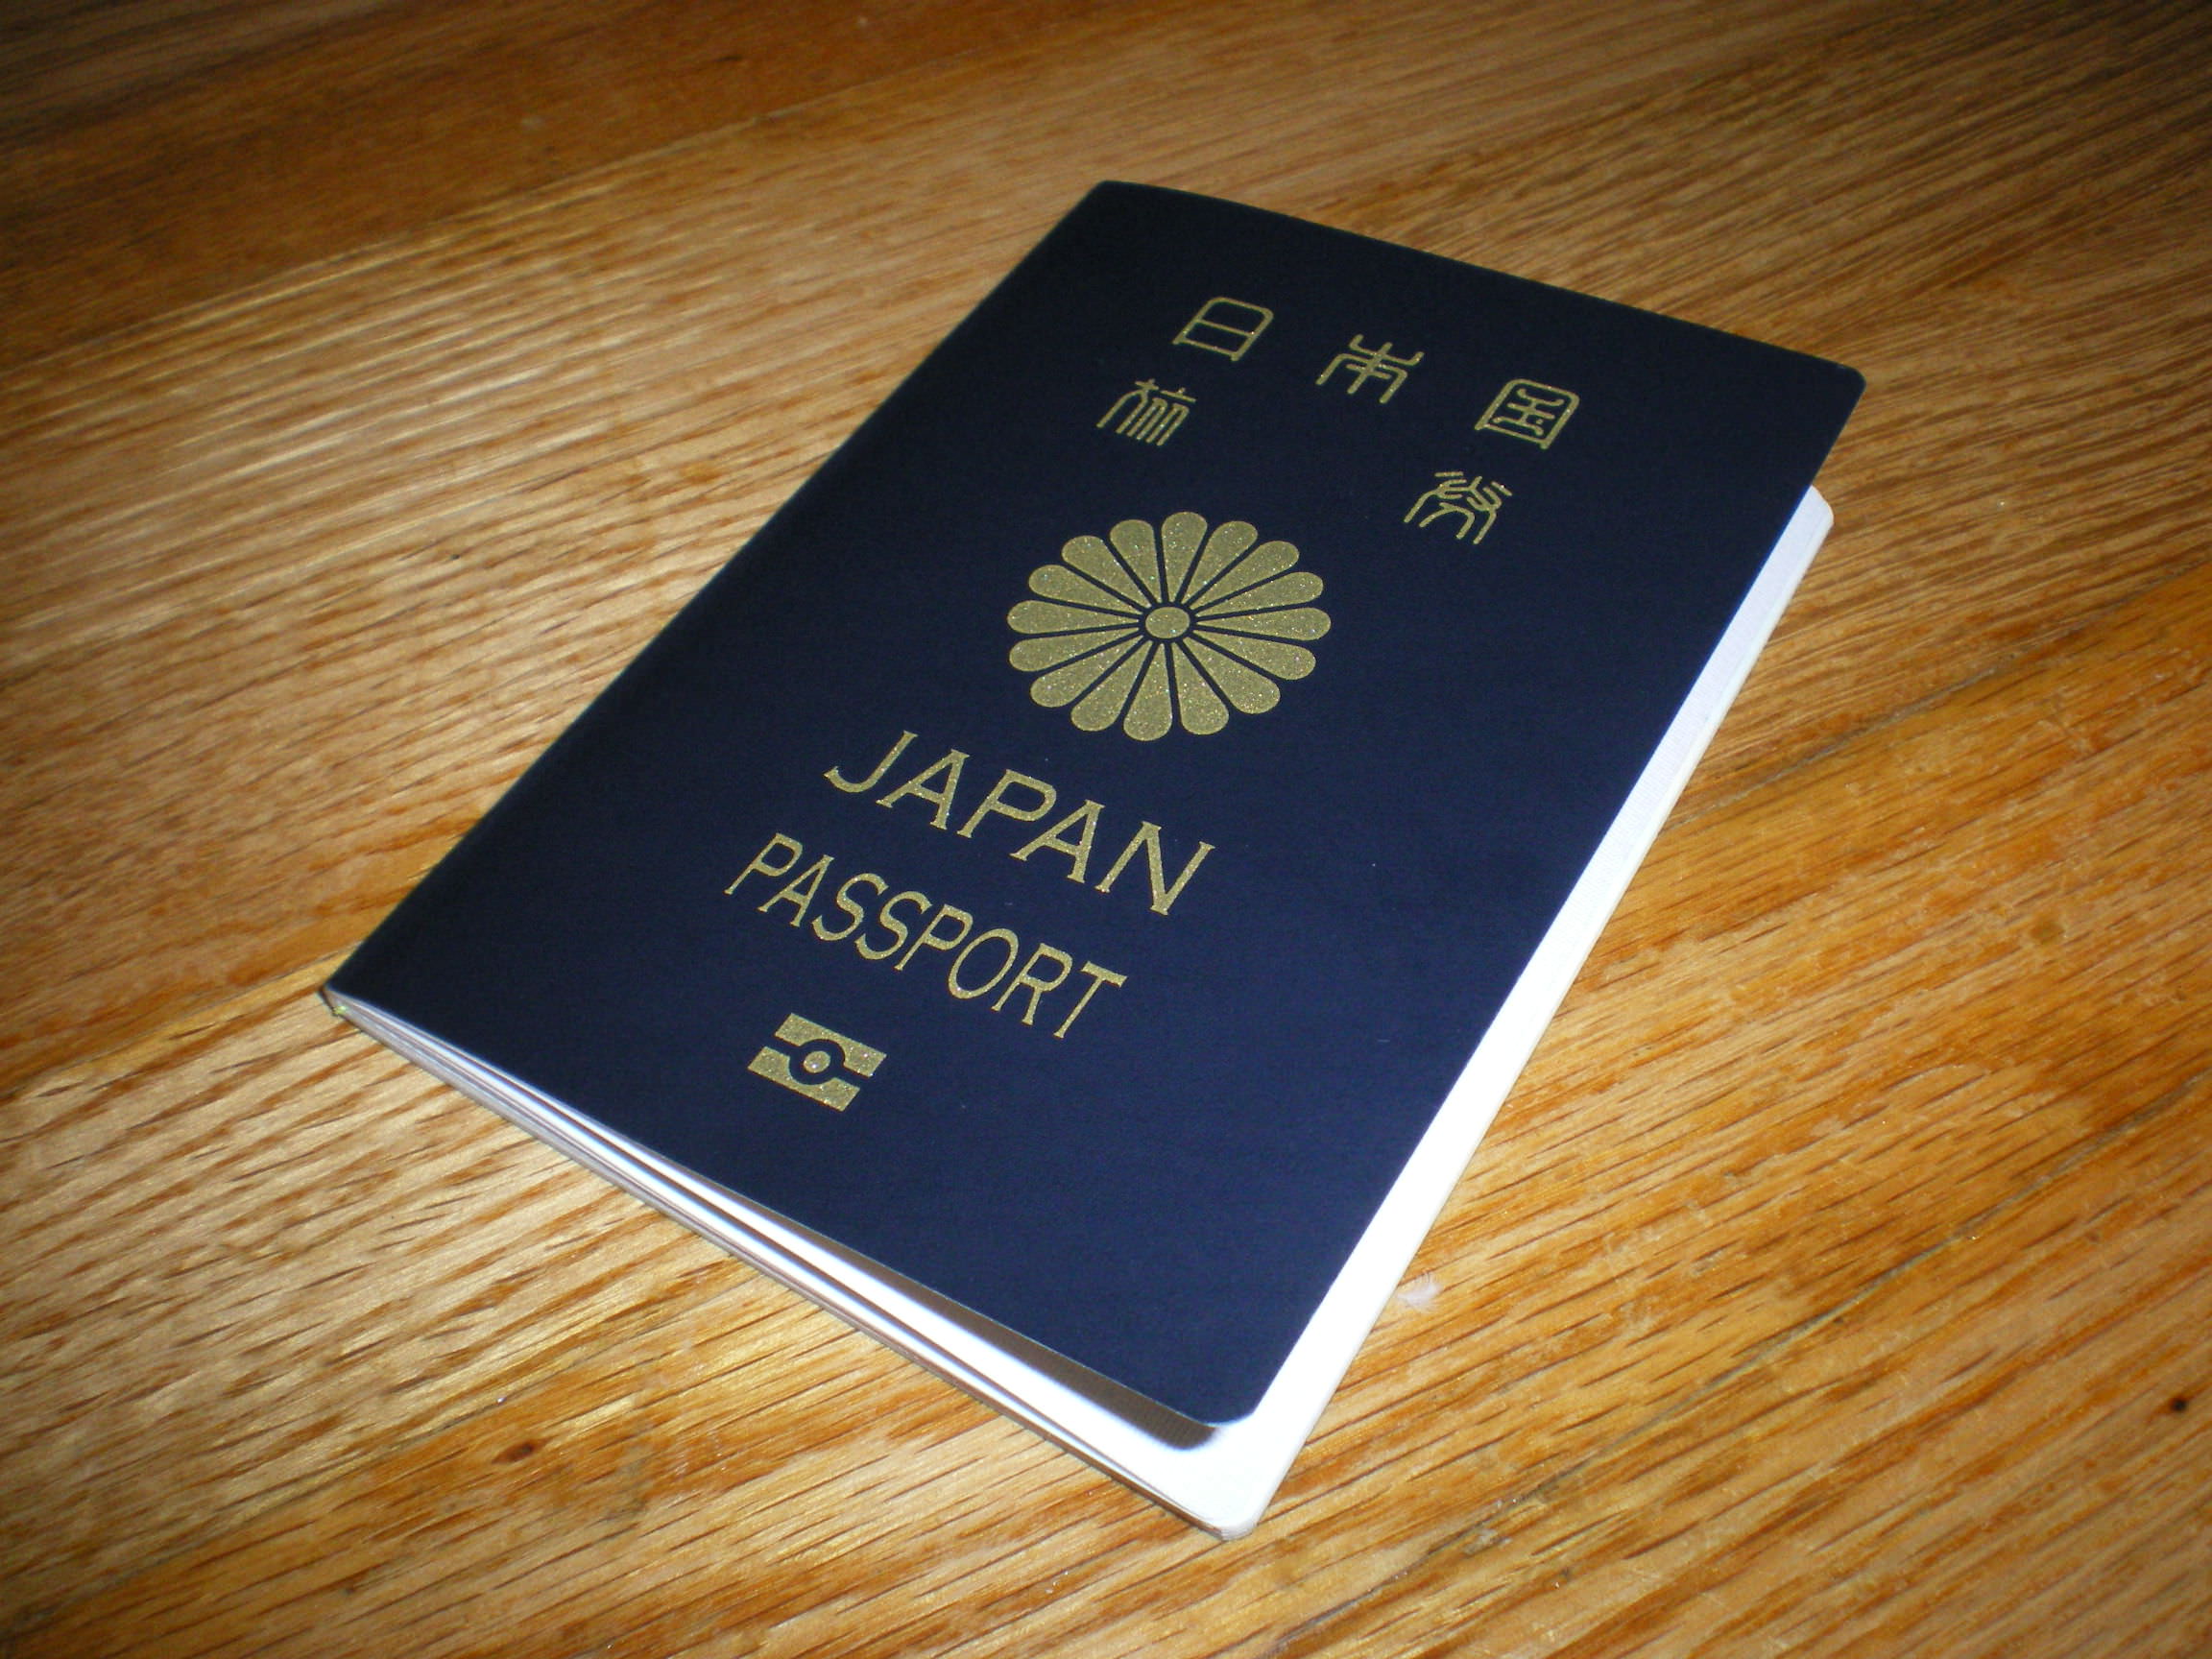 Japonya pasaport kontrolü